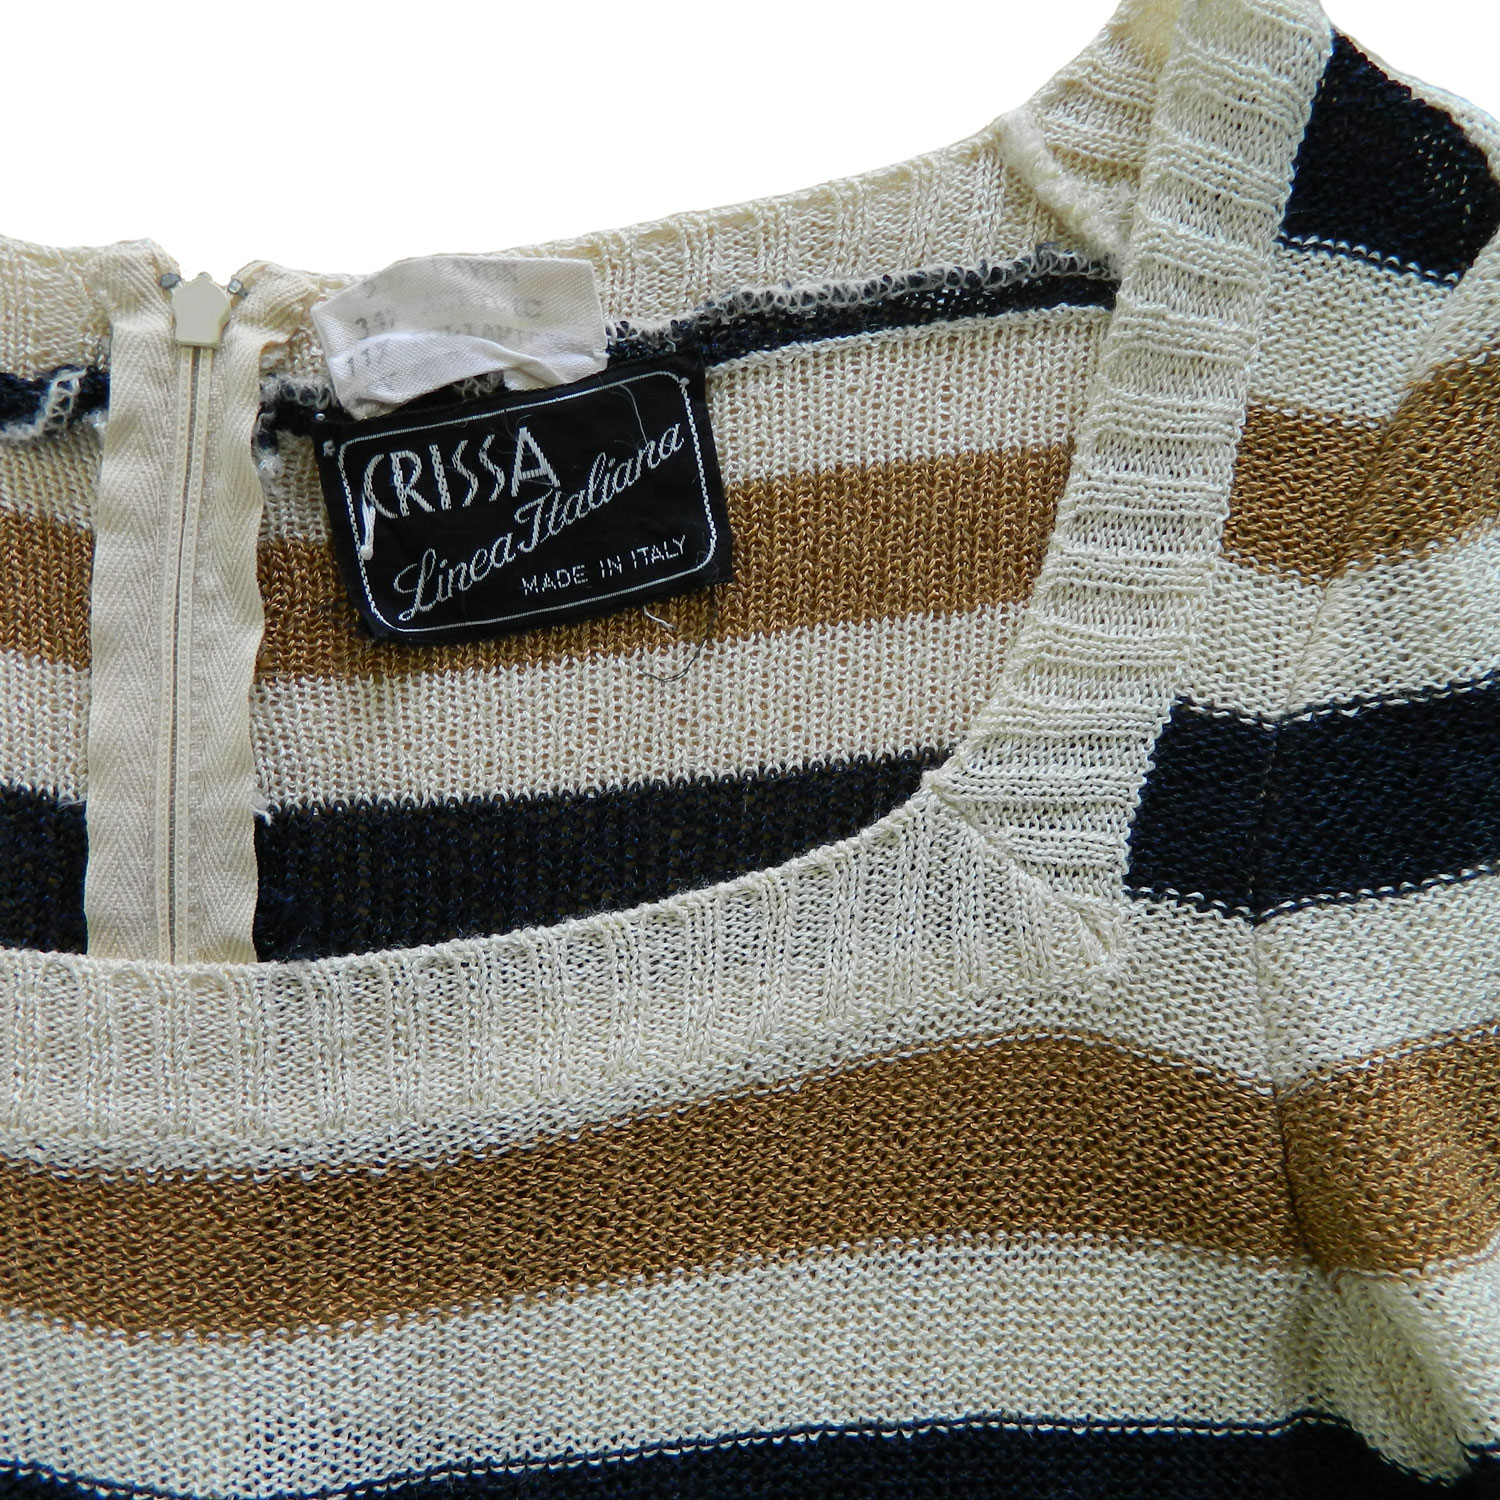 1970's sweater